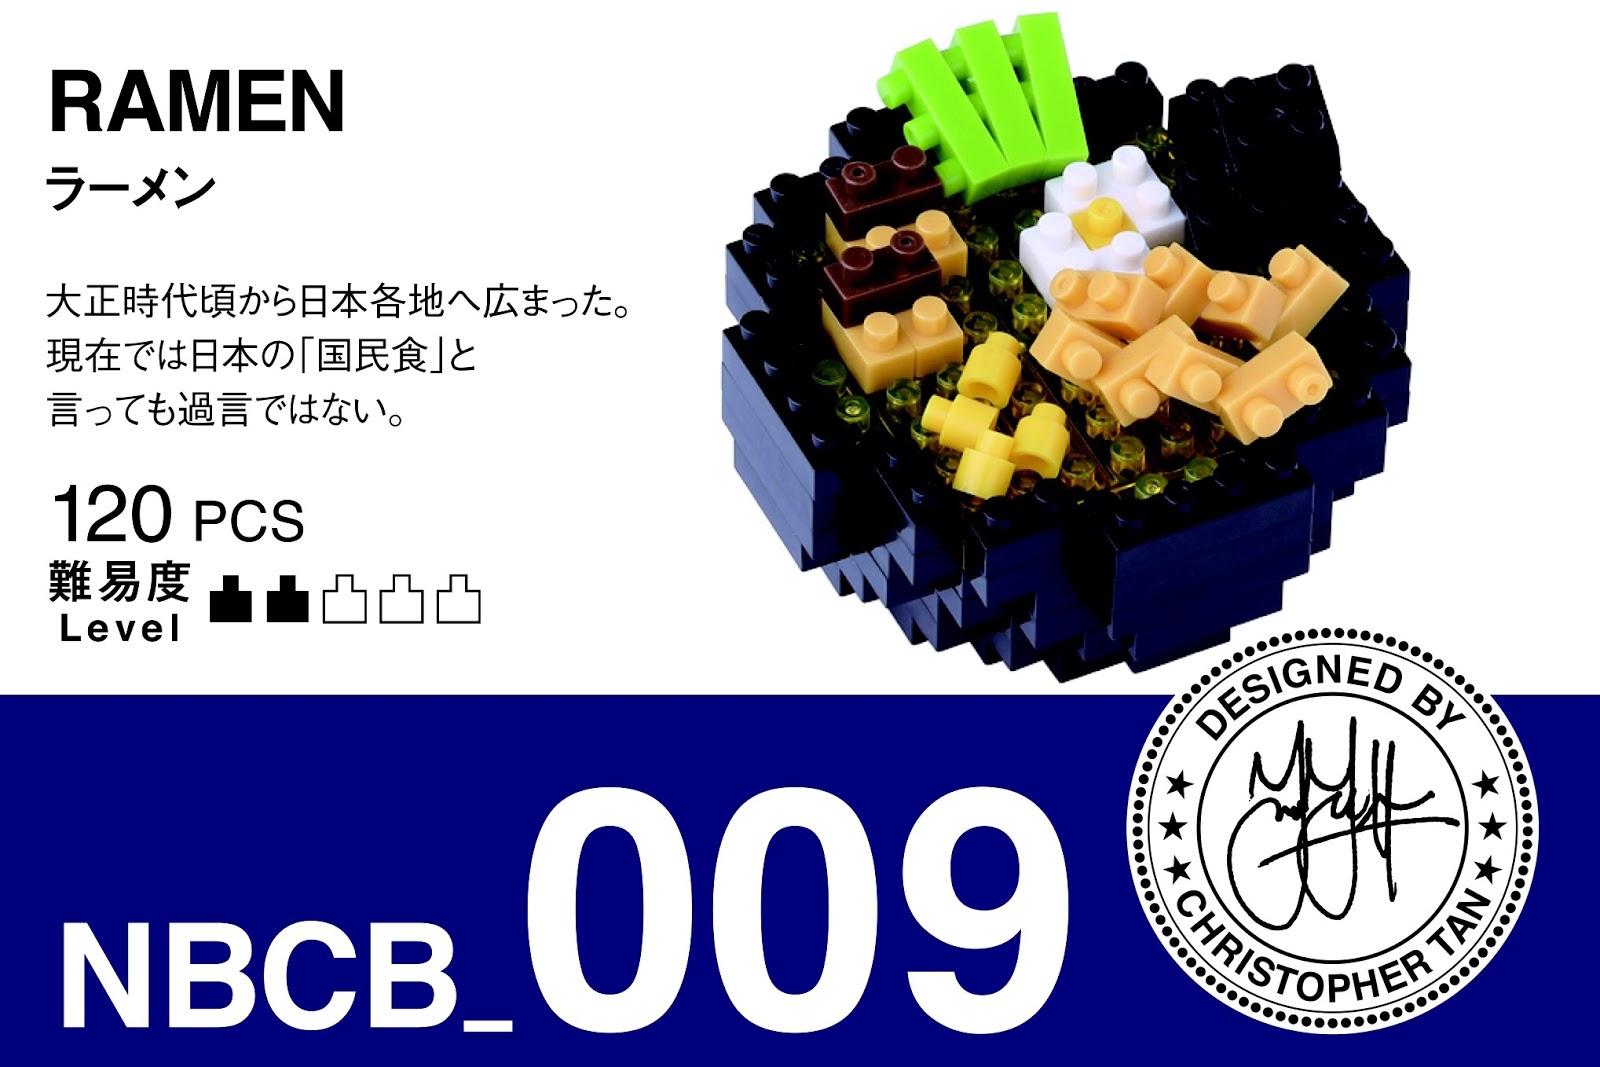 nanoblock NBCB_008 Bento designed by Christopher Tan 